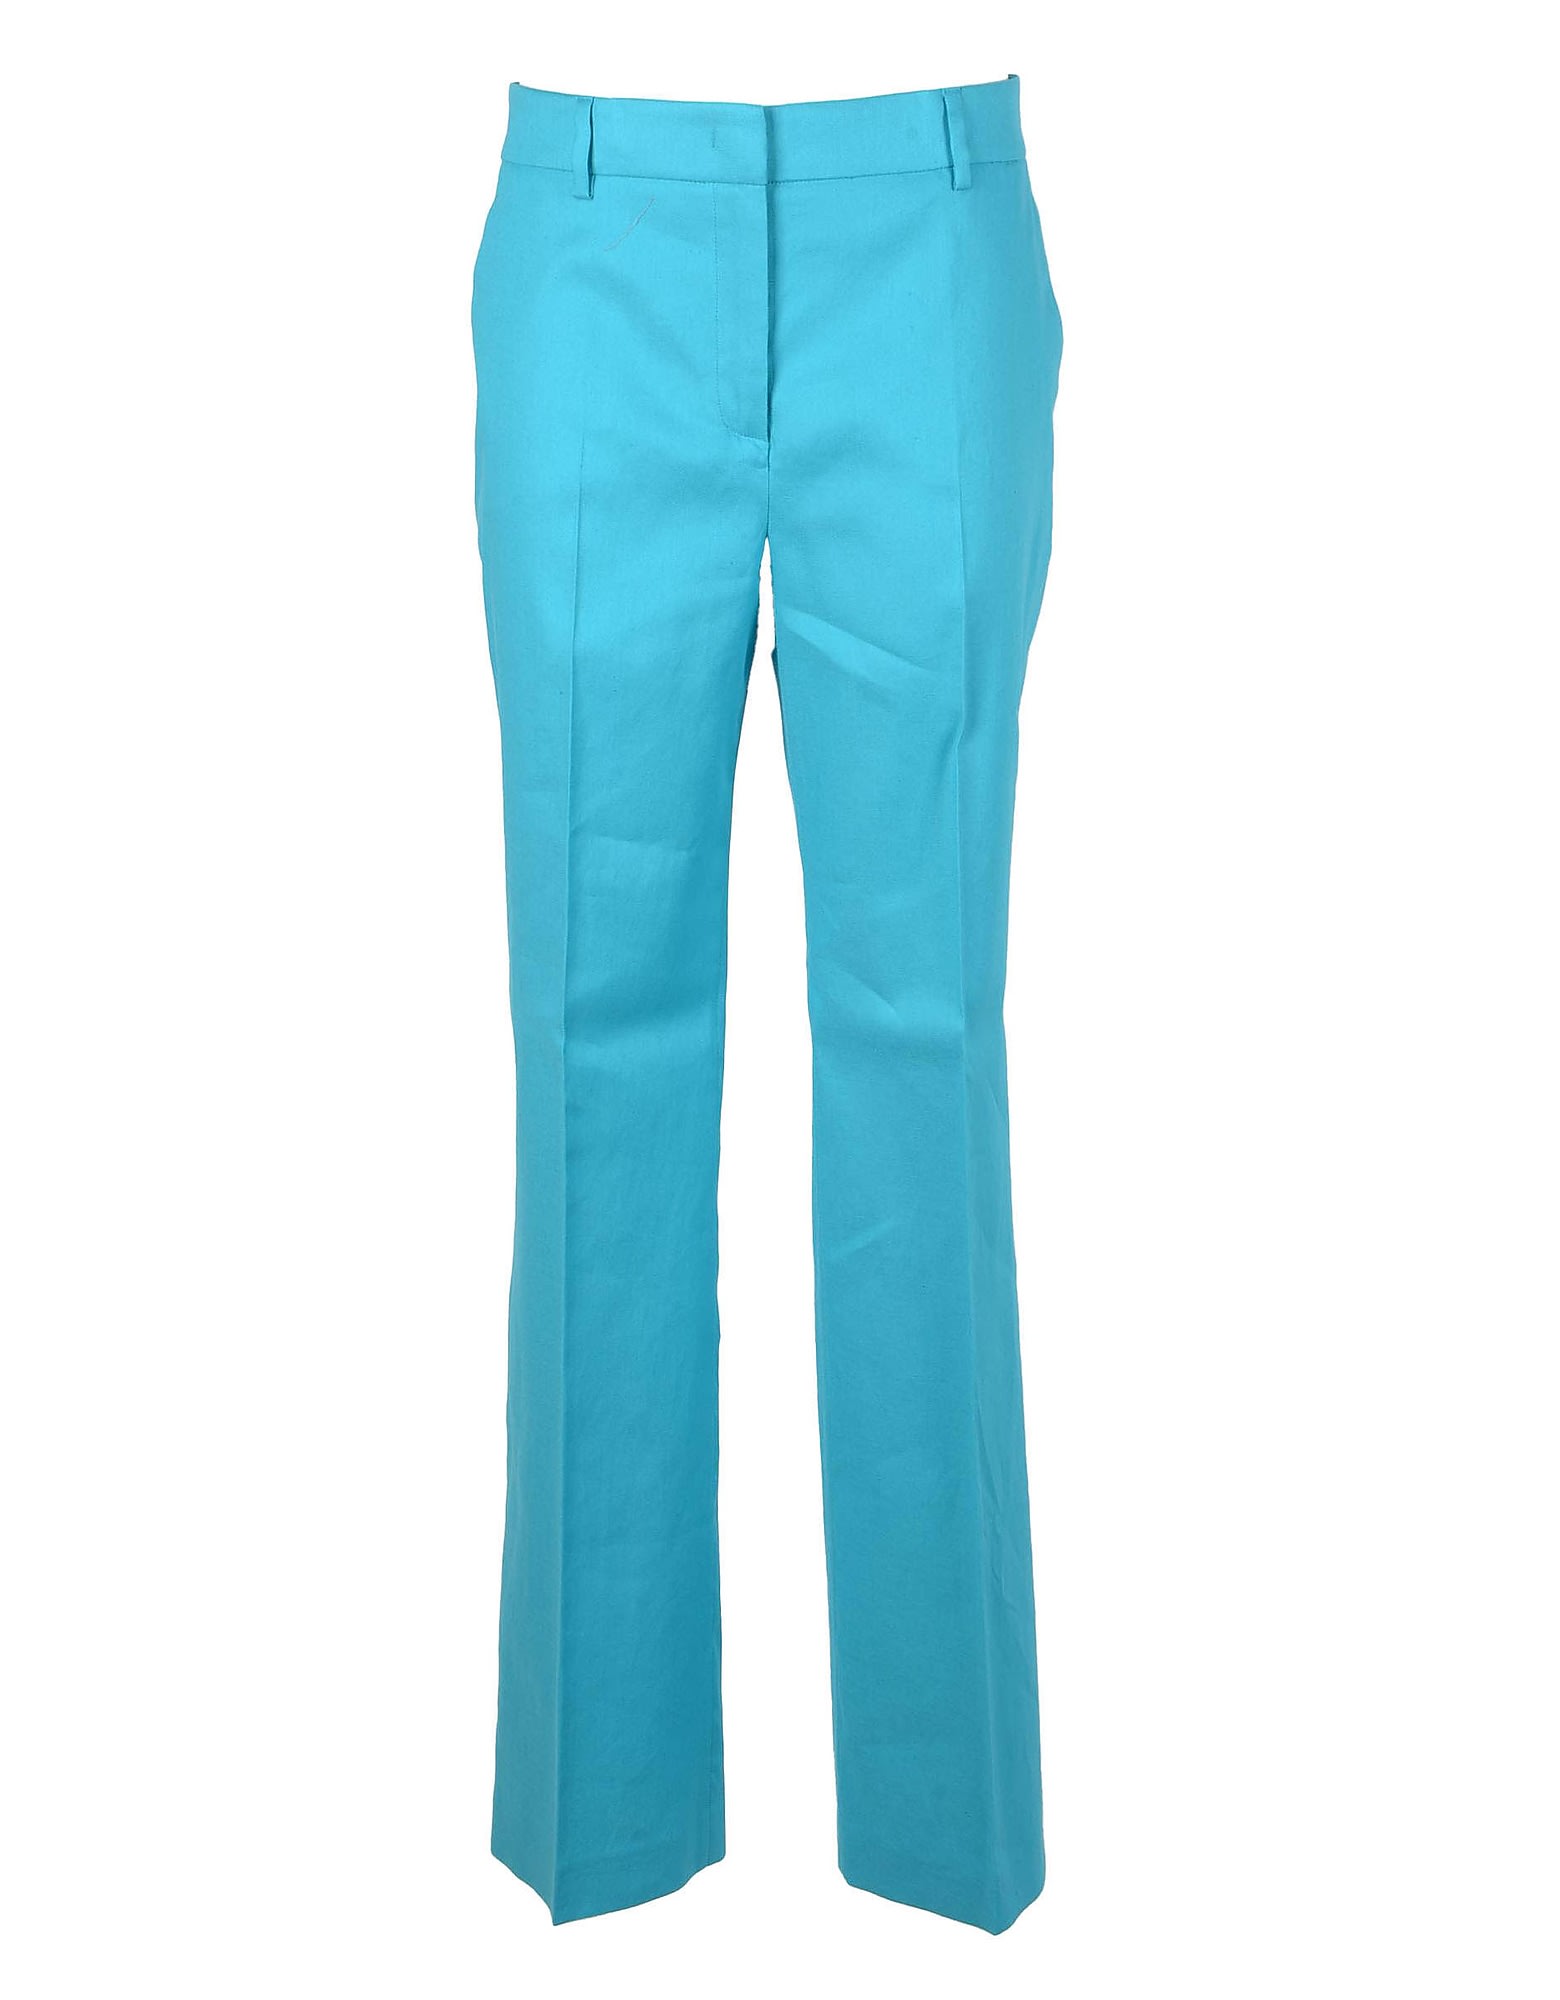 Alberta Ferretti Womens Turquoise Pants